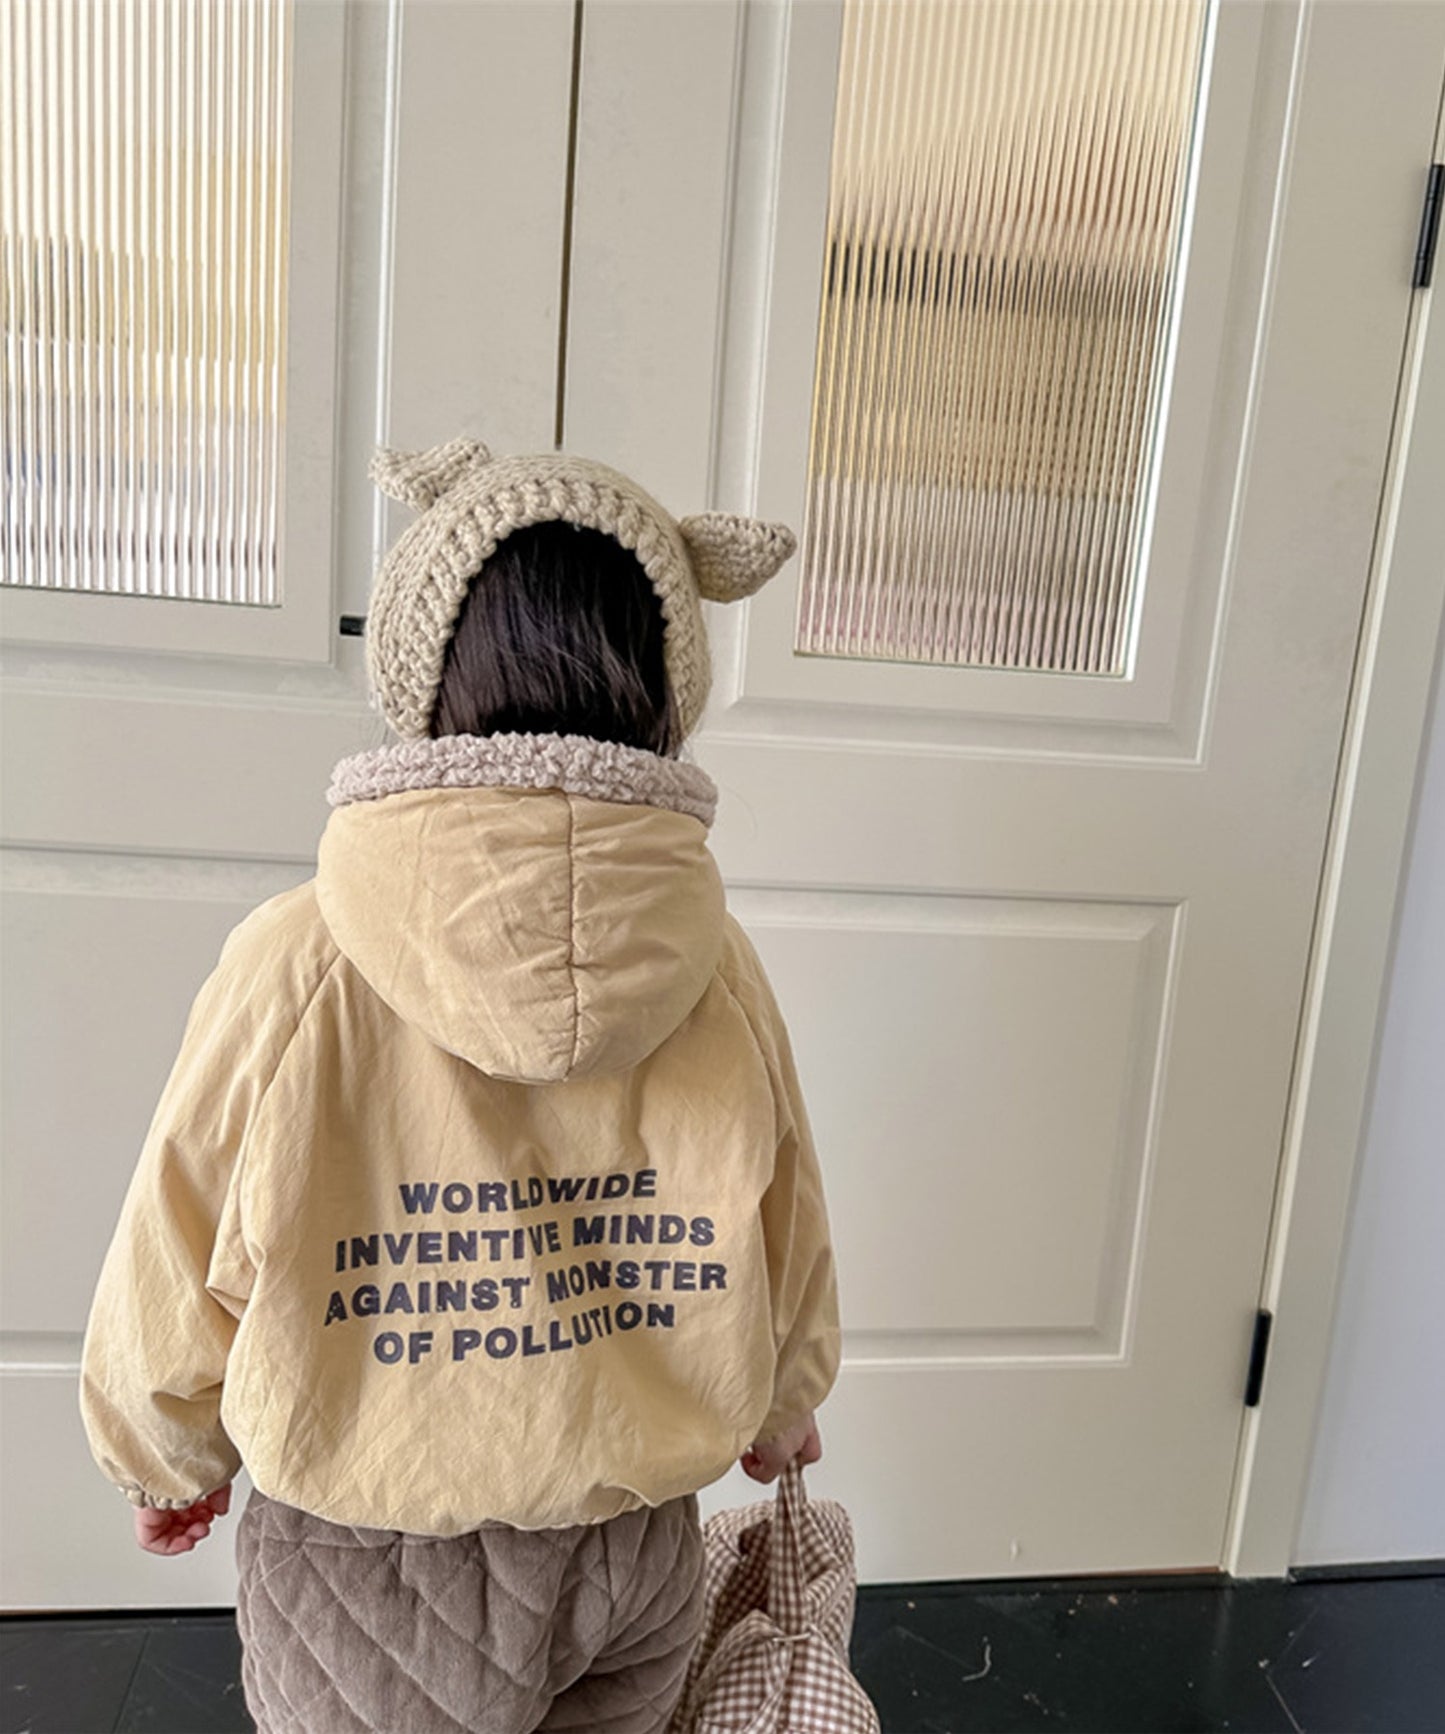 【aimoha-KIDS-】韓国子供服 暖かいボア裏地中綿ジャケット